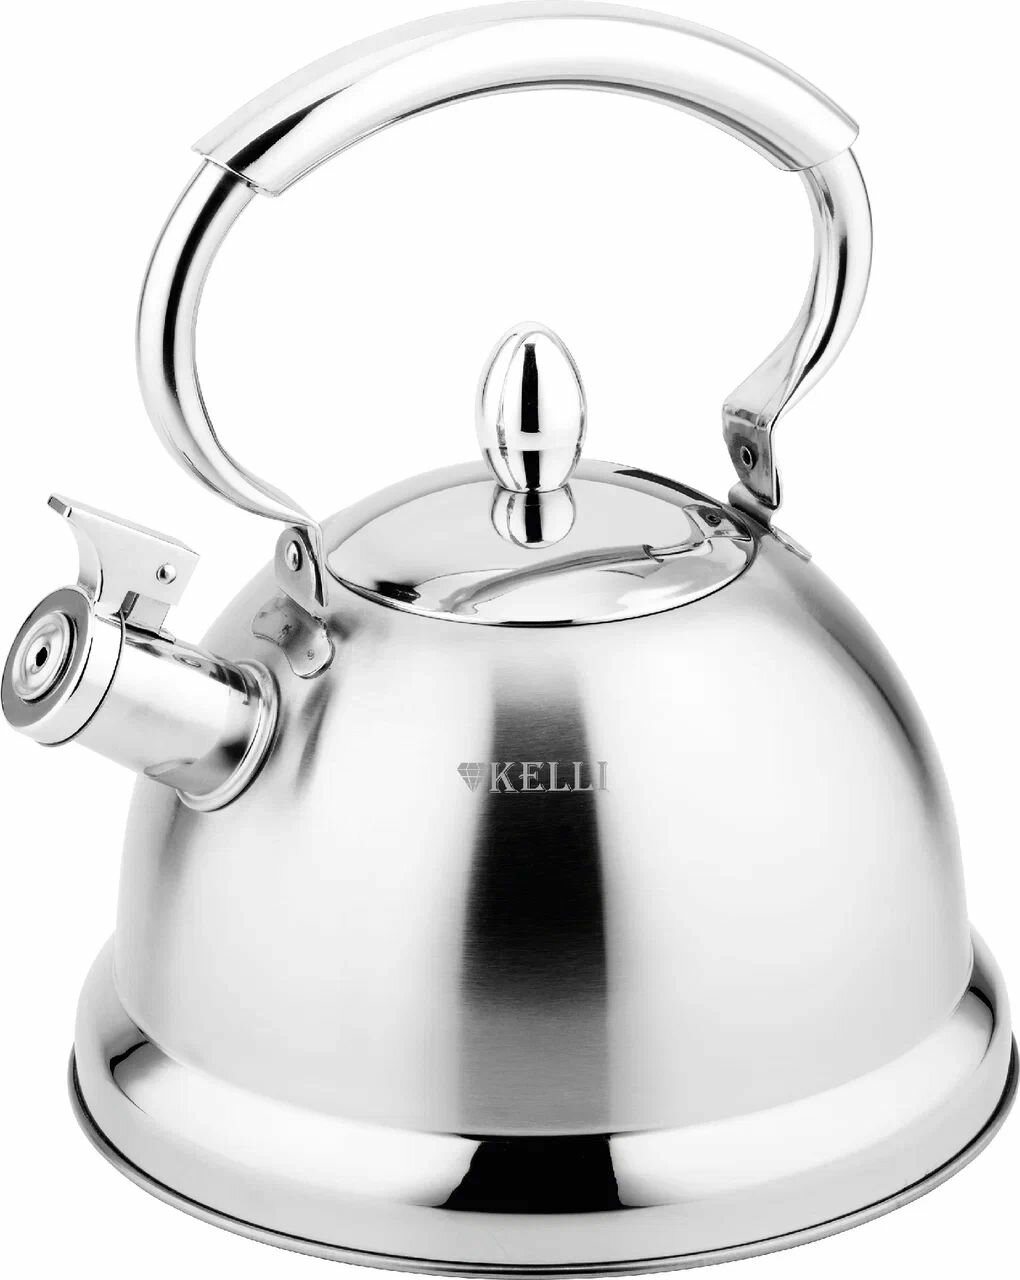 Чайник Kelli KL-4346 объем 3,2л